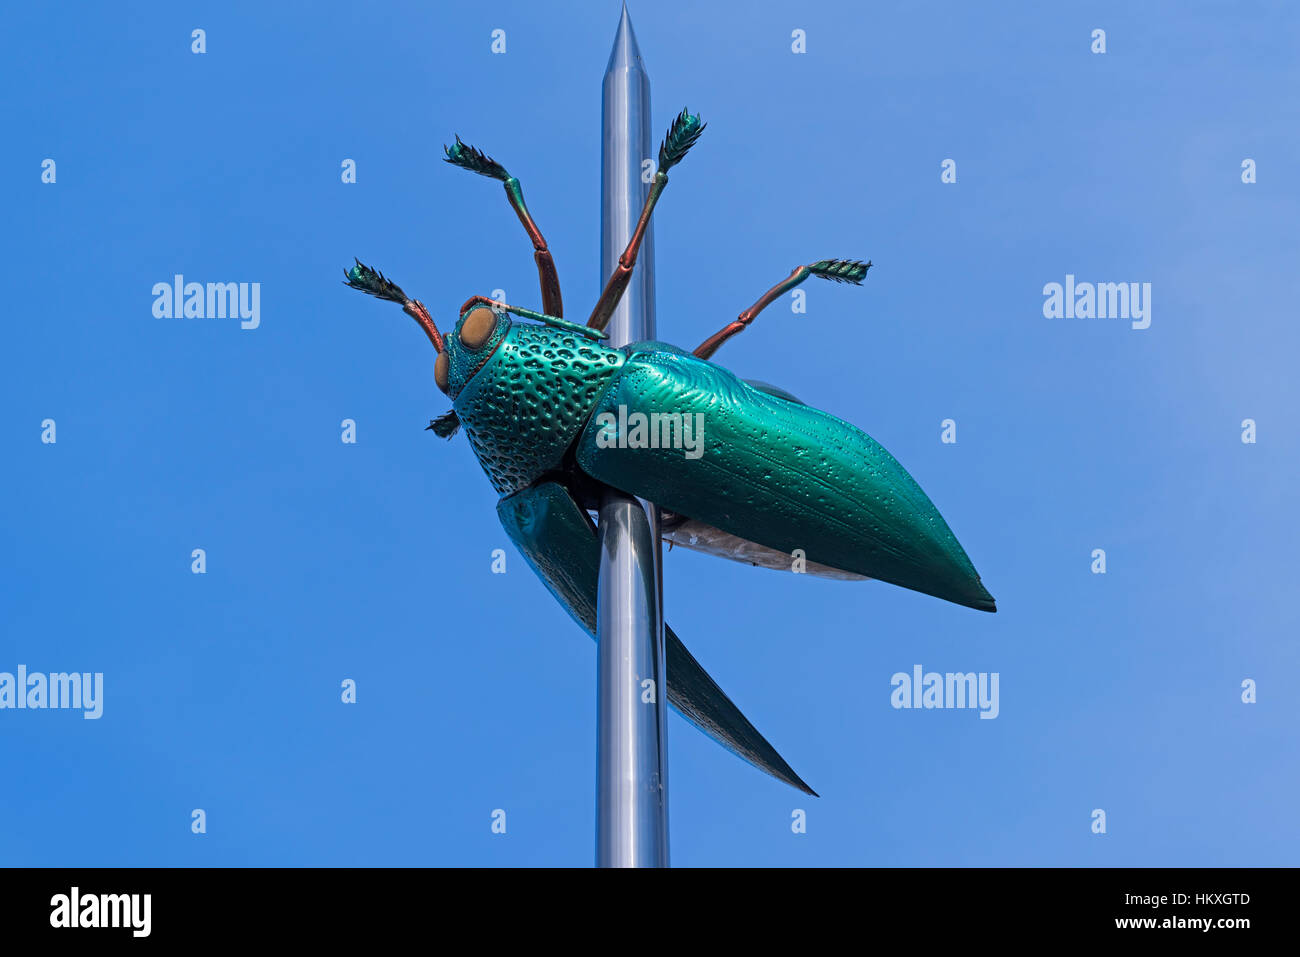 Totem beetle statue Ladeuzeplein Leuven Belgium Stock Photo - Alamy